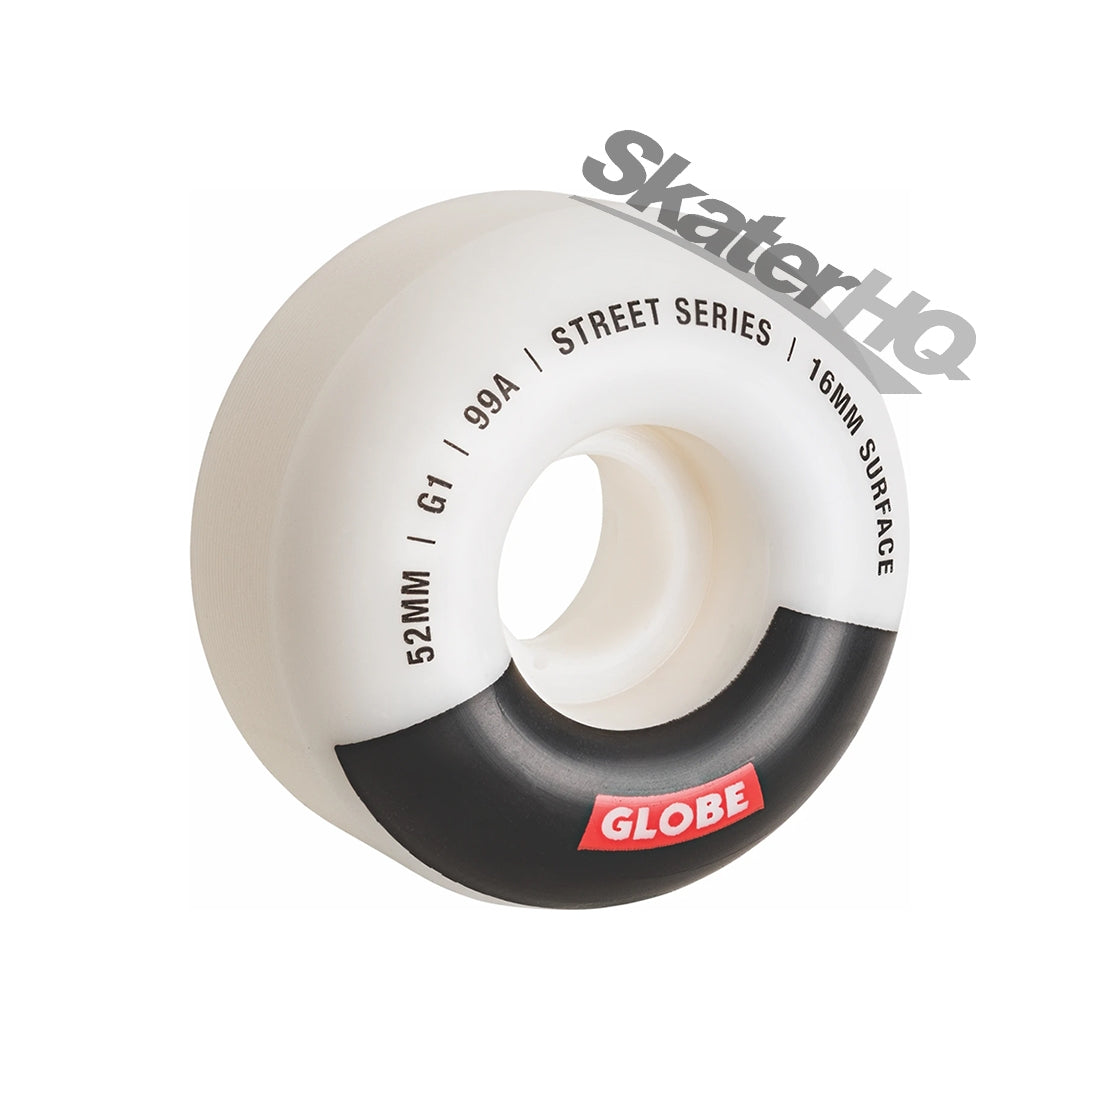 Globe G1 Street Bar 52mm/99a 4pk - White/Black Skateboard Wheels